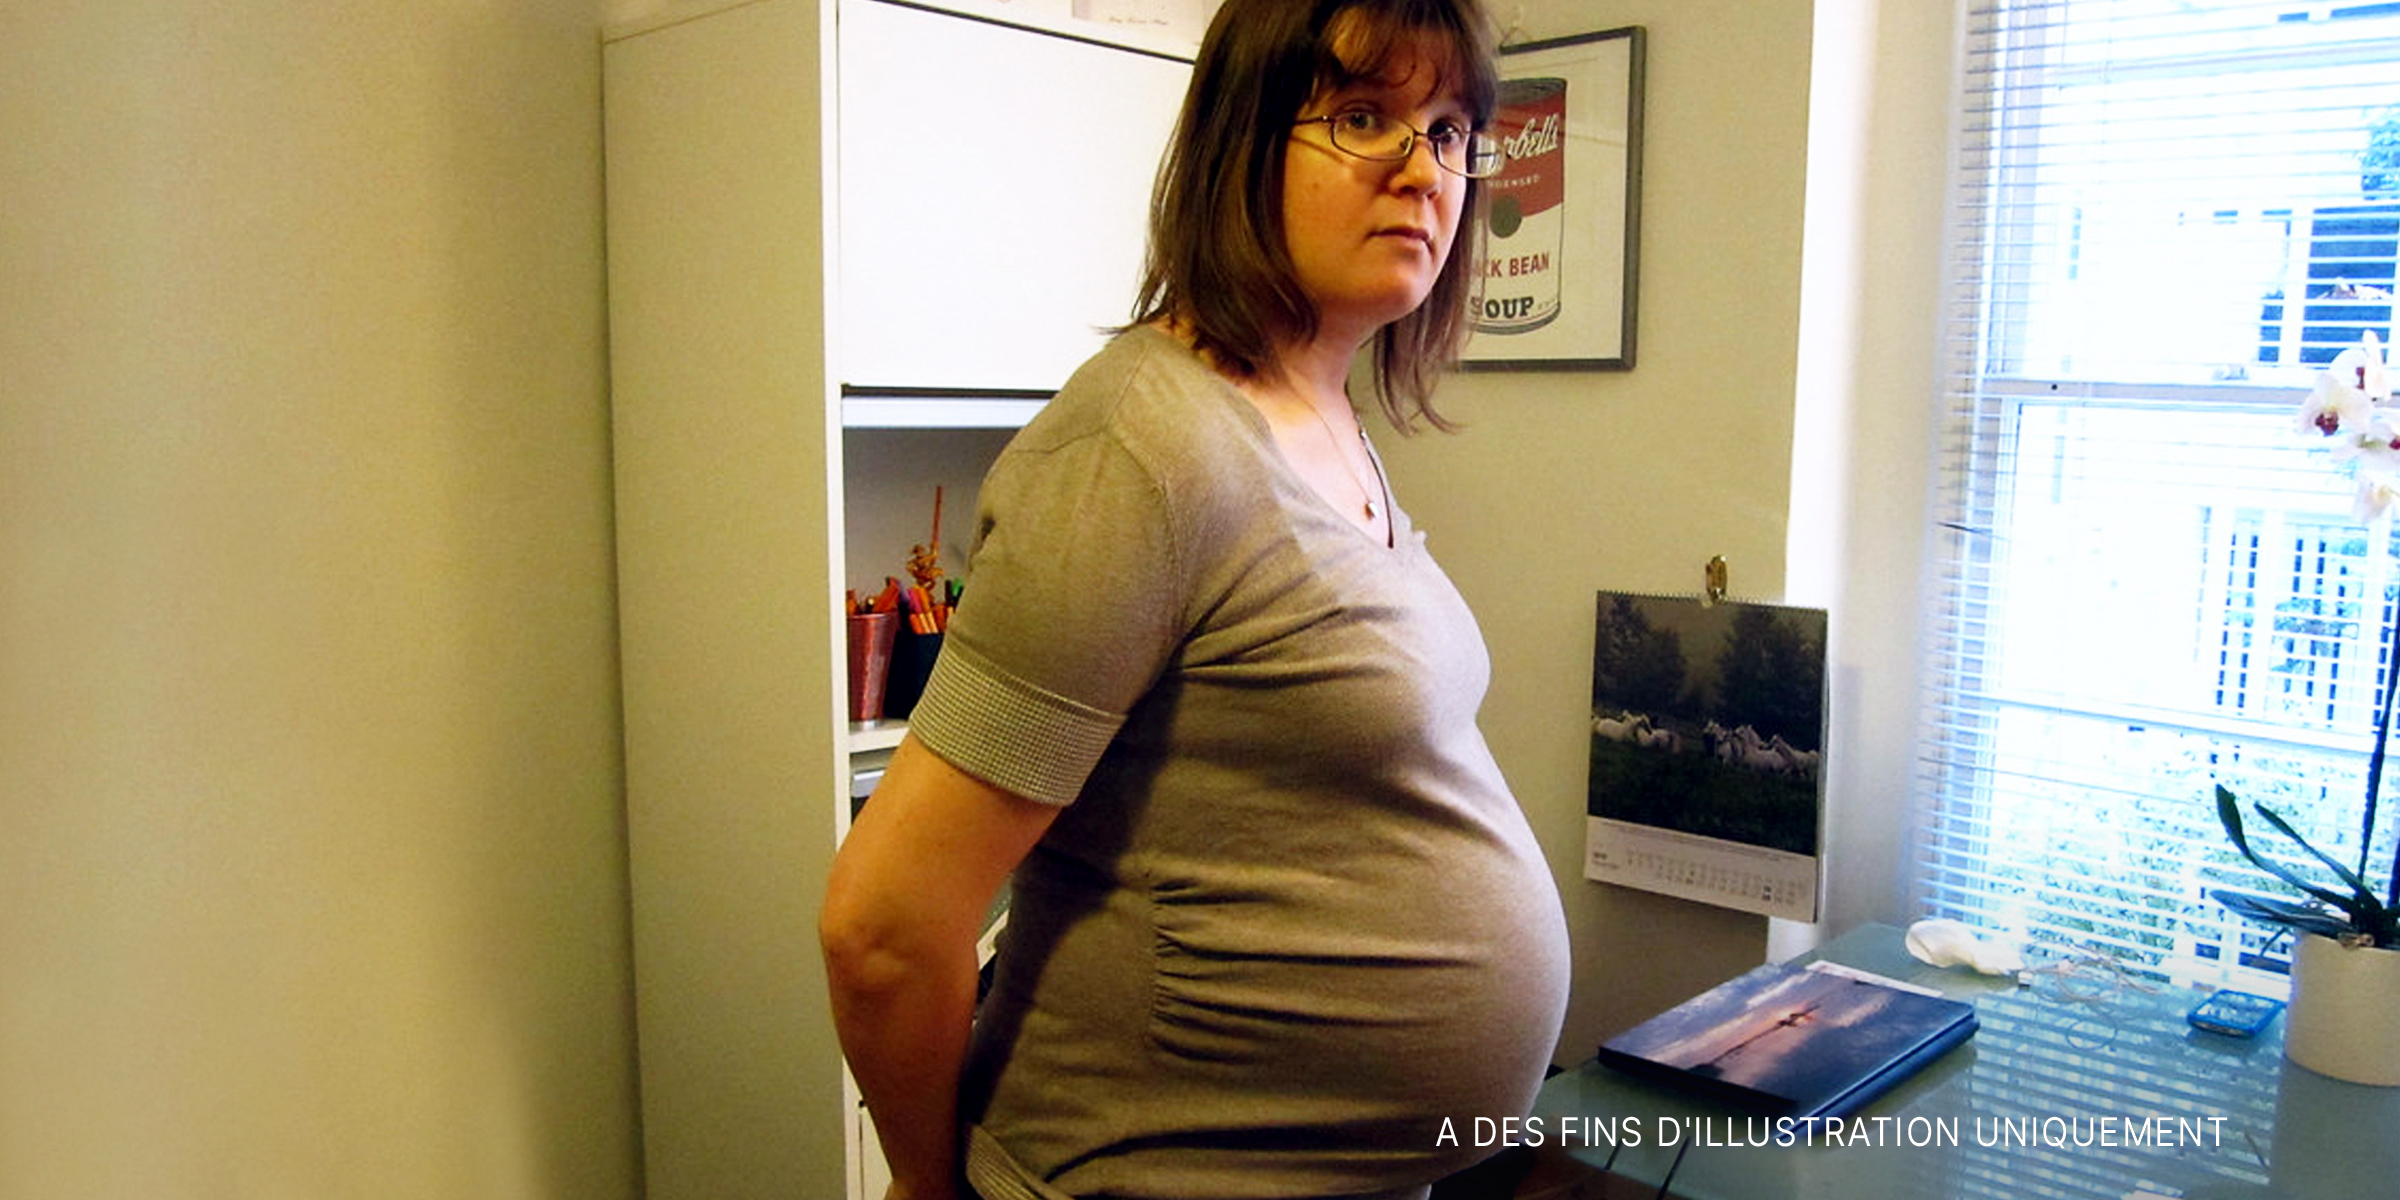 Une femme enceinte | Source : flickr.com/(CC BY 2.0)/by acme